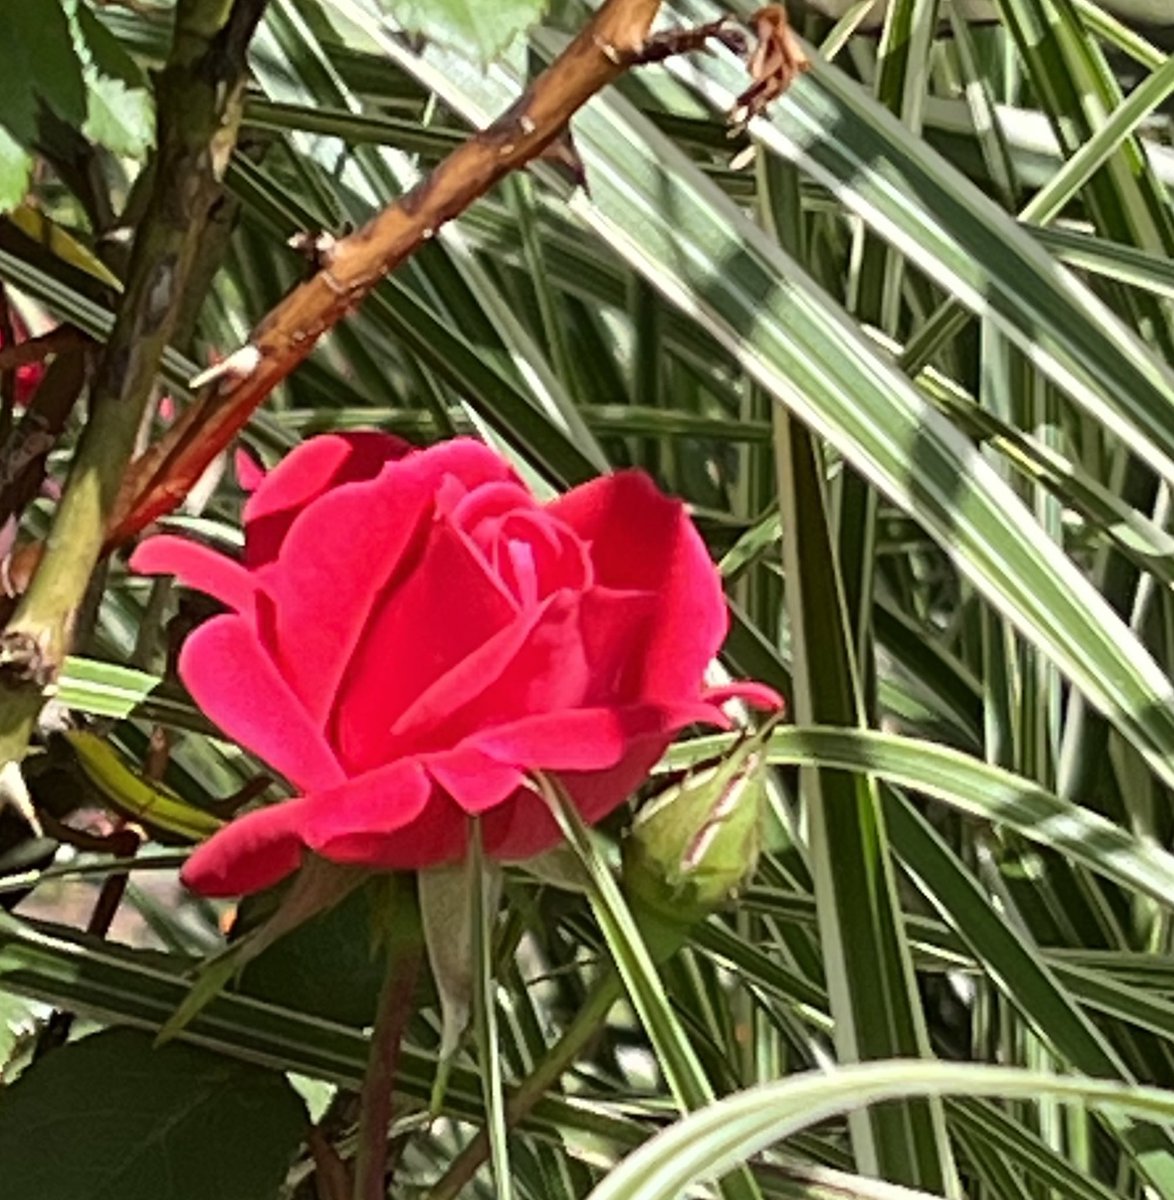 Rose Wednesday 🌹
#RoseWednesday #rose #FlowersOfTwitter #flower #flowerphotography #NaturePhotography #outdoorphotography #photography #photographers